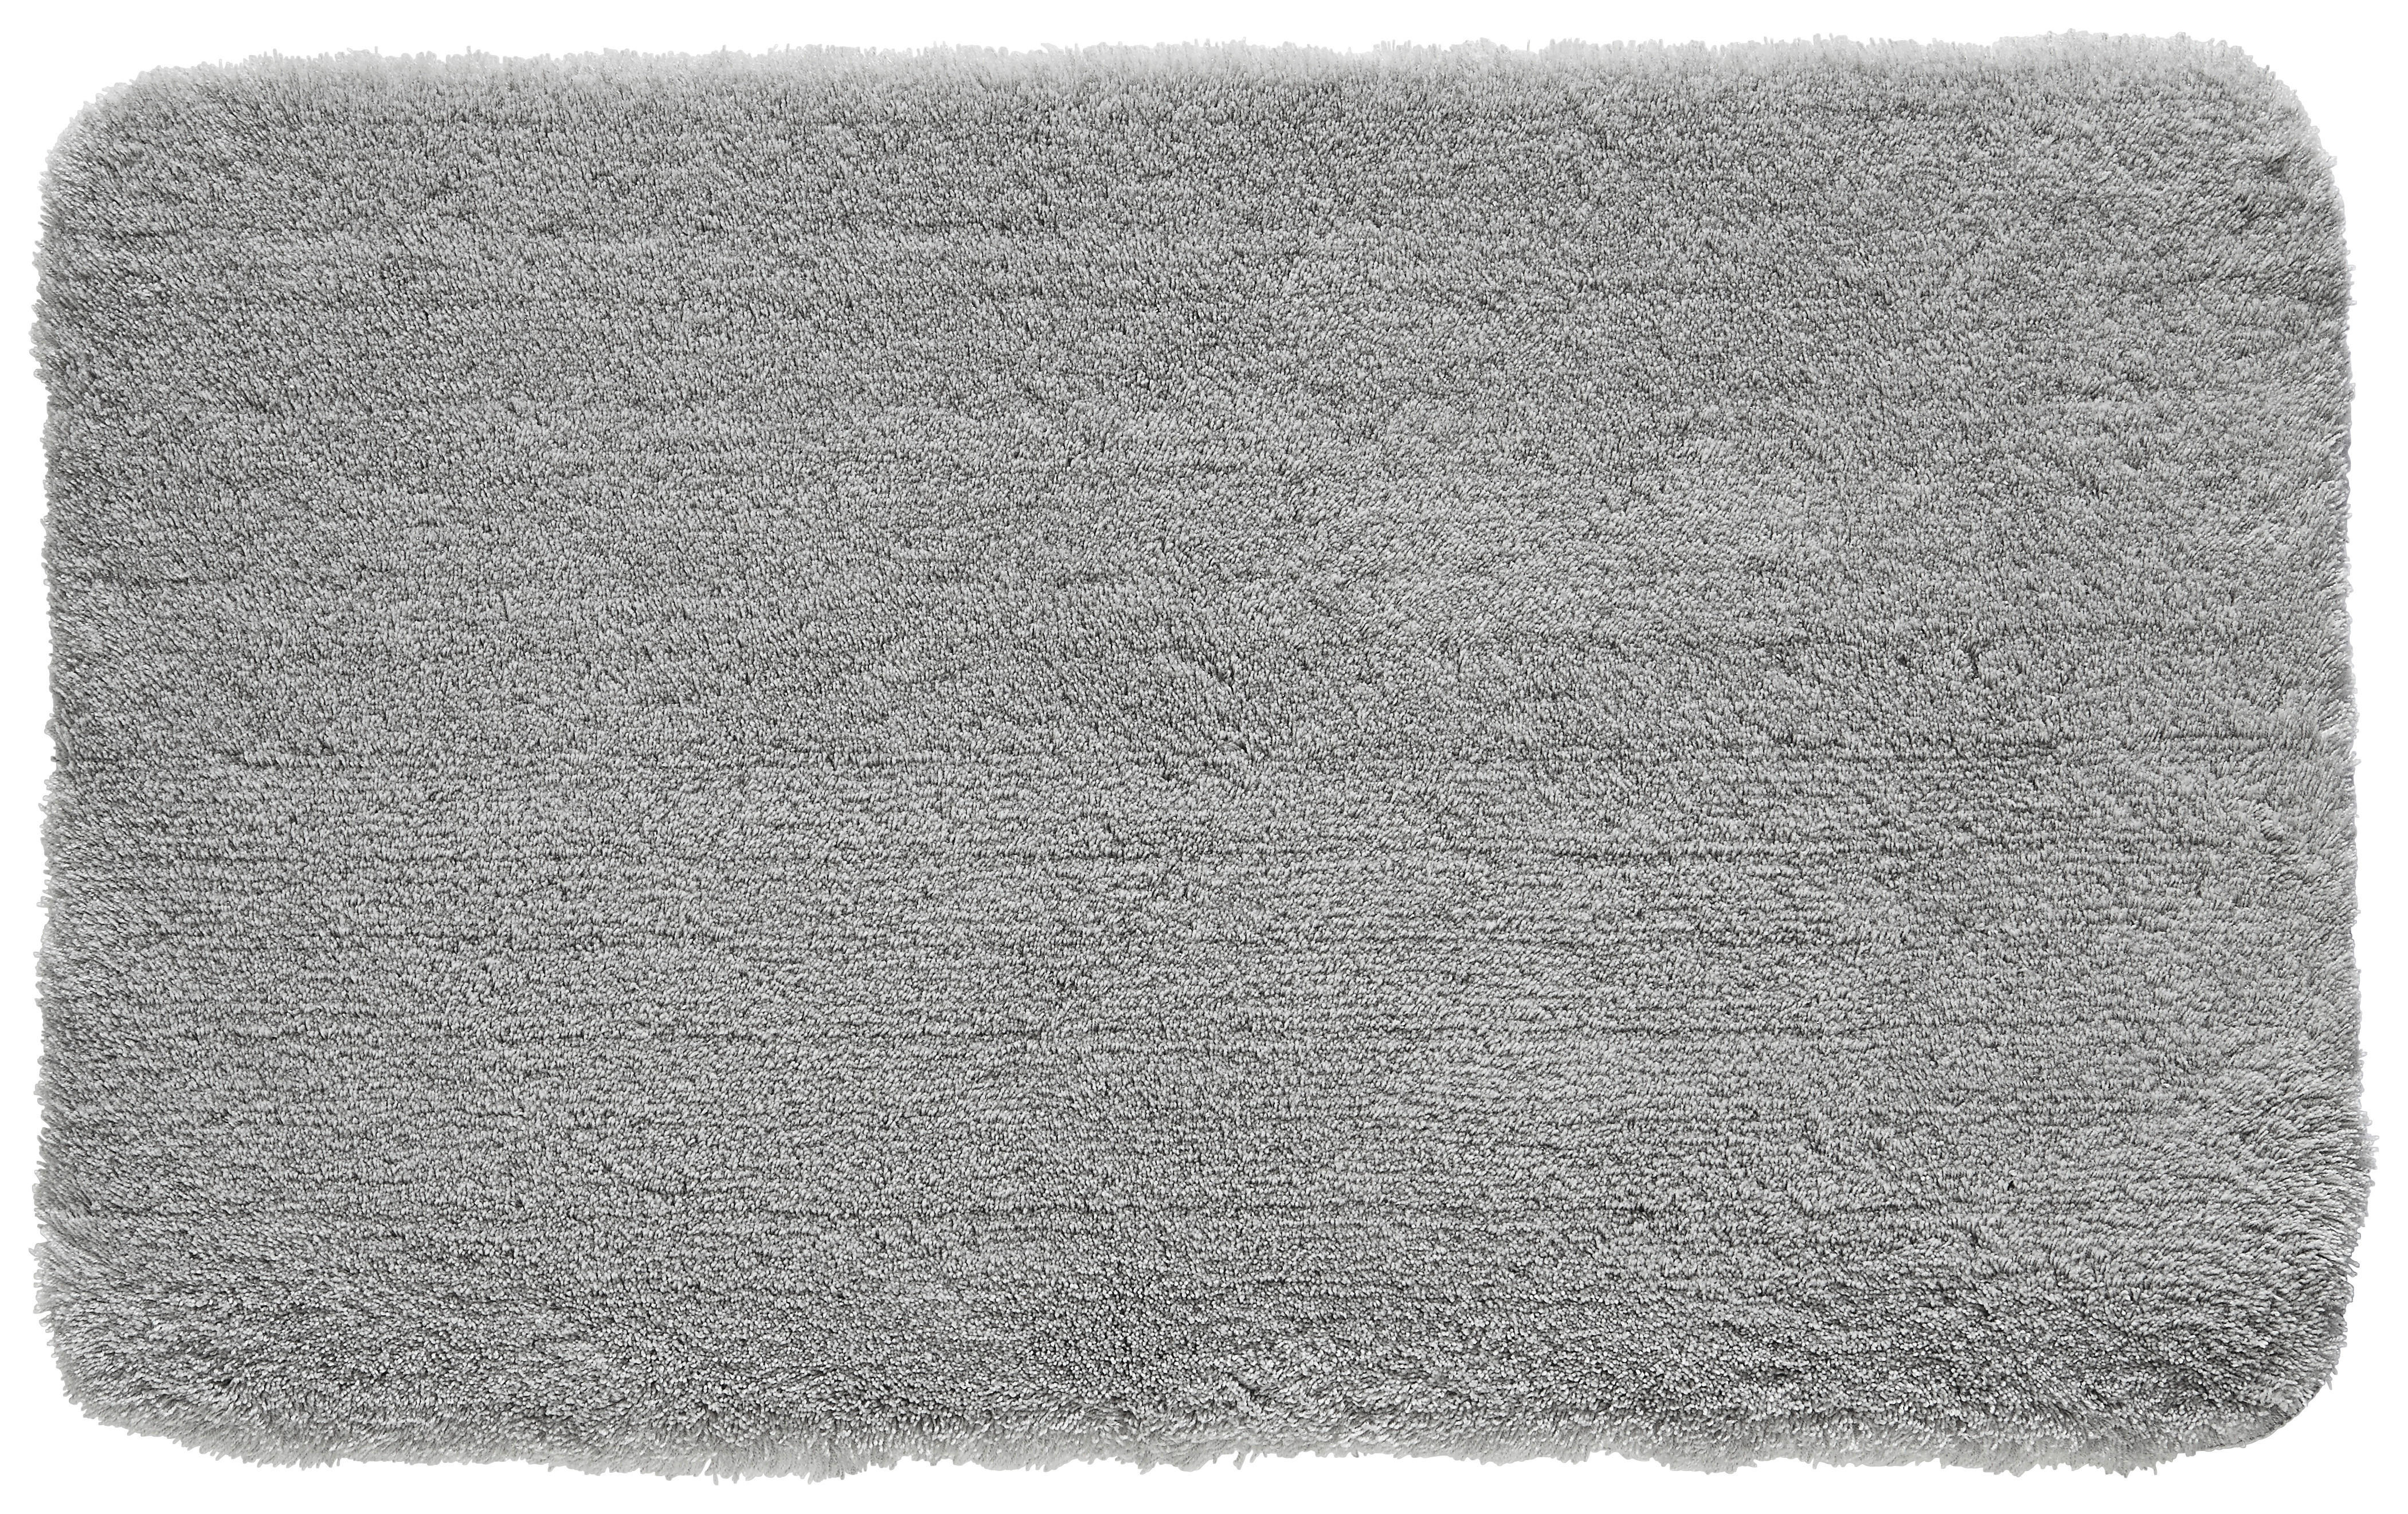 BADTEPPICH Relax 60/100 cm  - Grau, Basics, Kunststoff/Textil (60/100cm) - Kleine Wolke